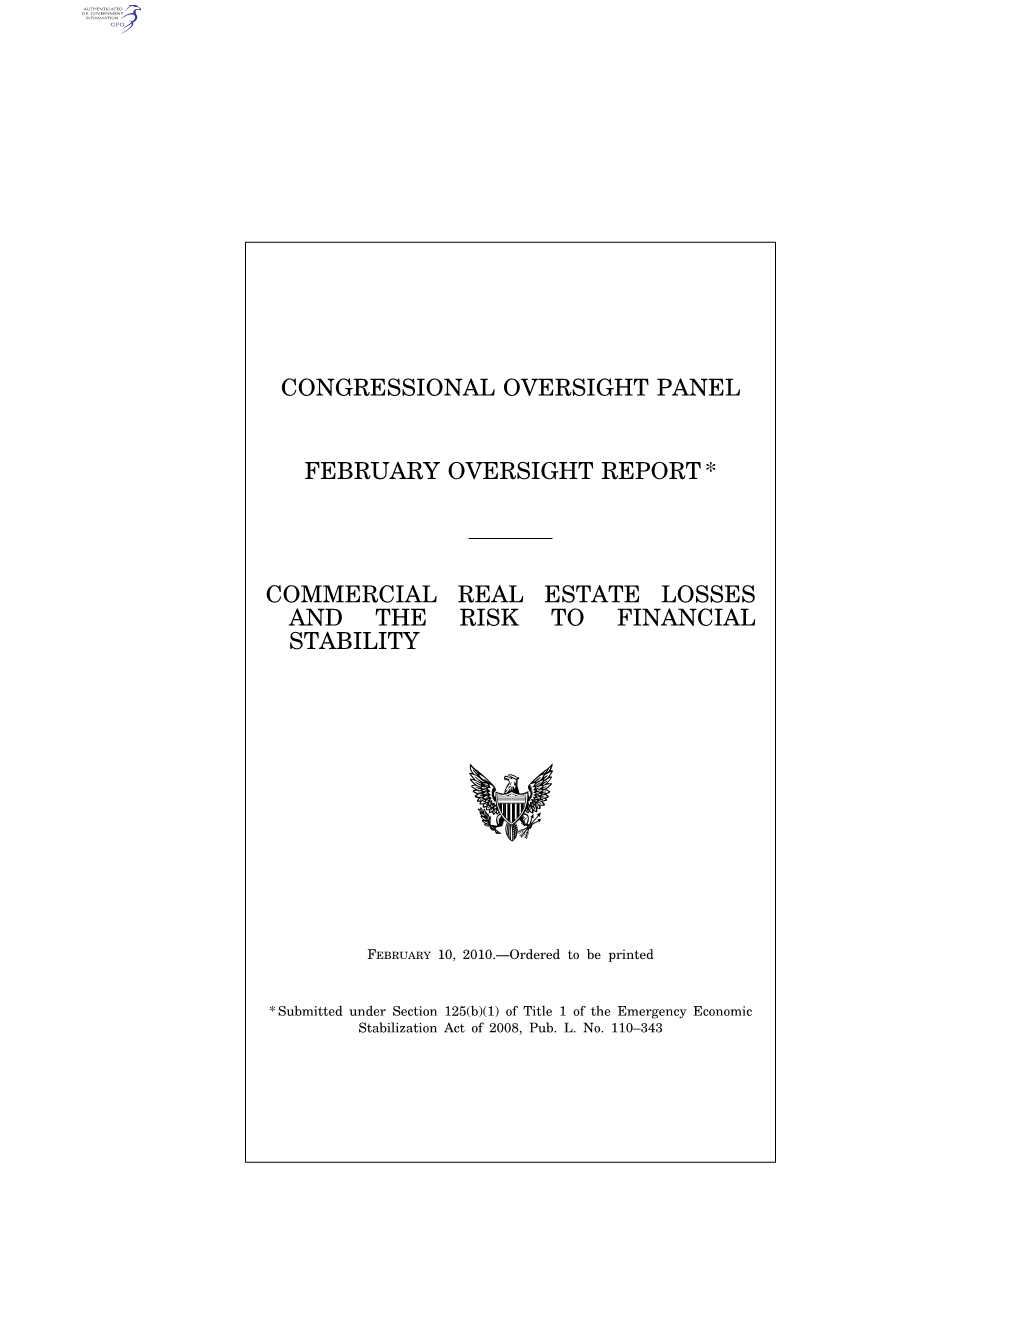 Congressional Oversight Panel February Oversight Report